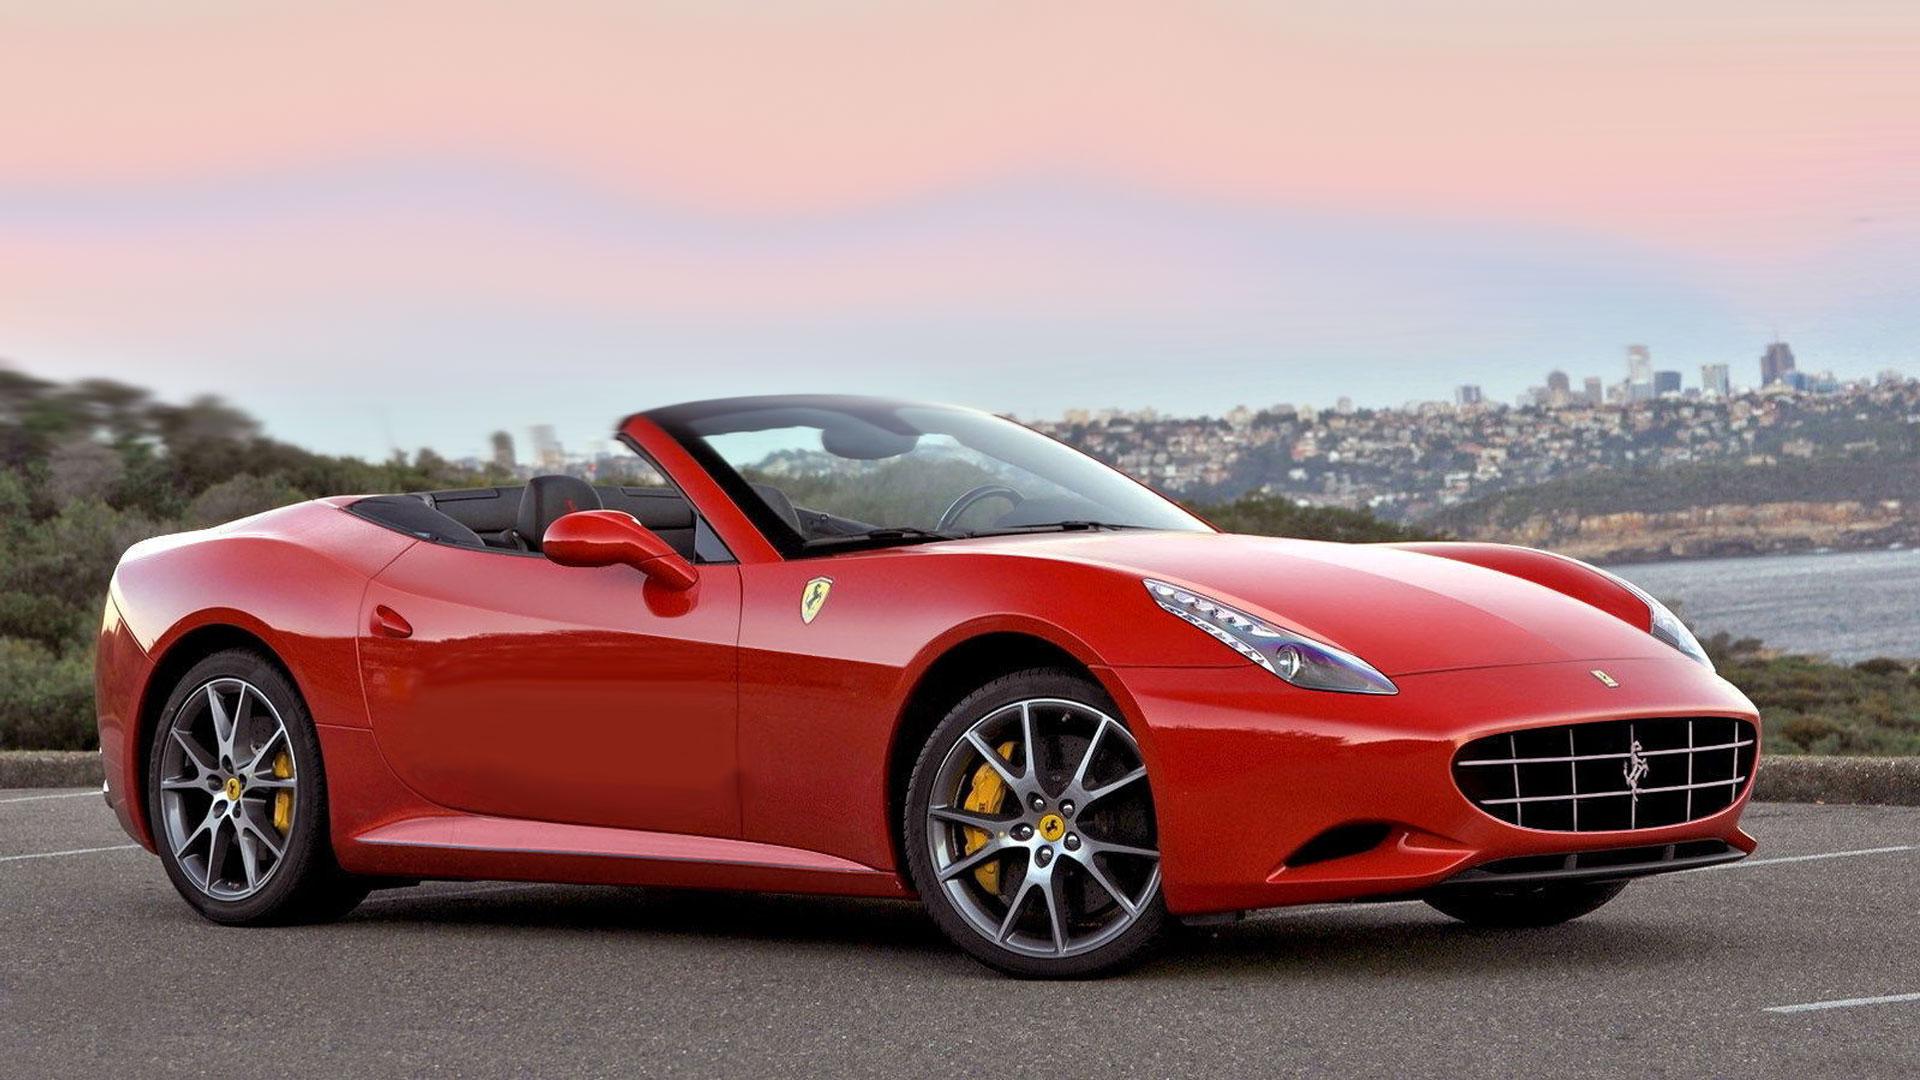 Ferrari California Wallpaper and Background Image